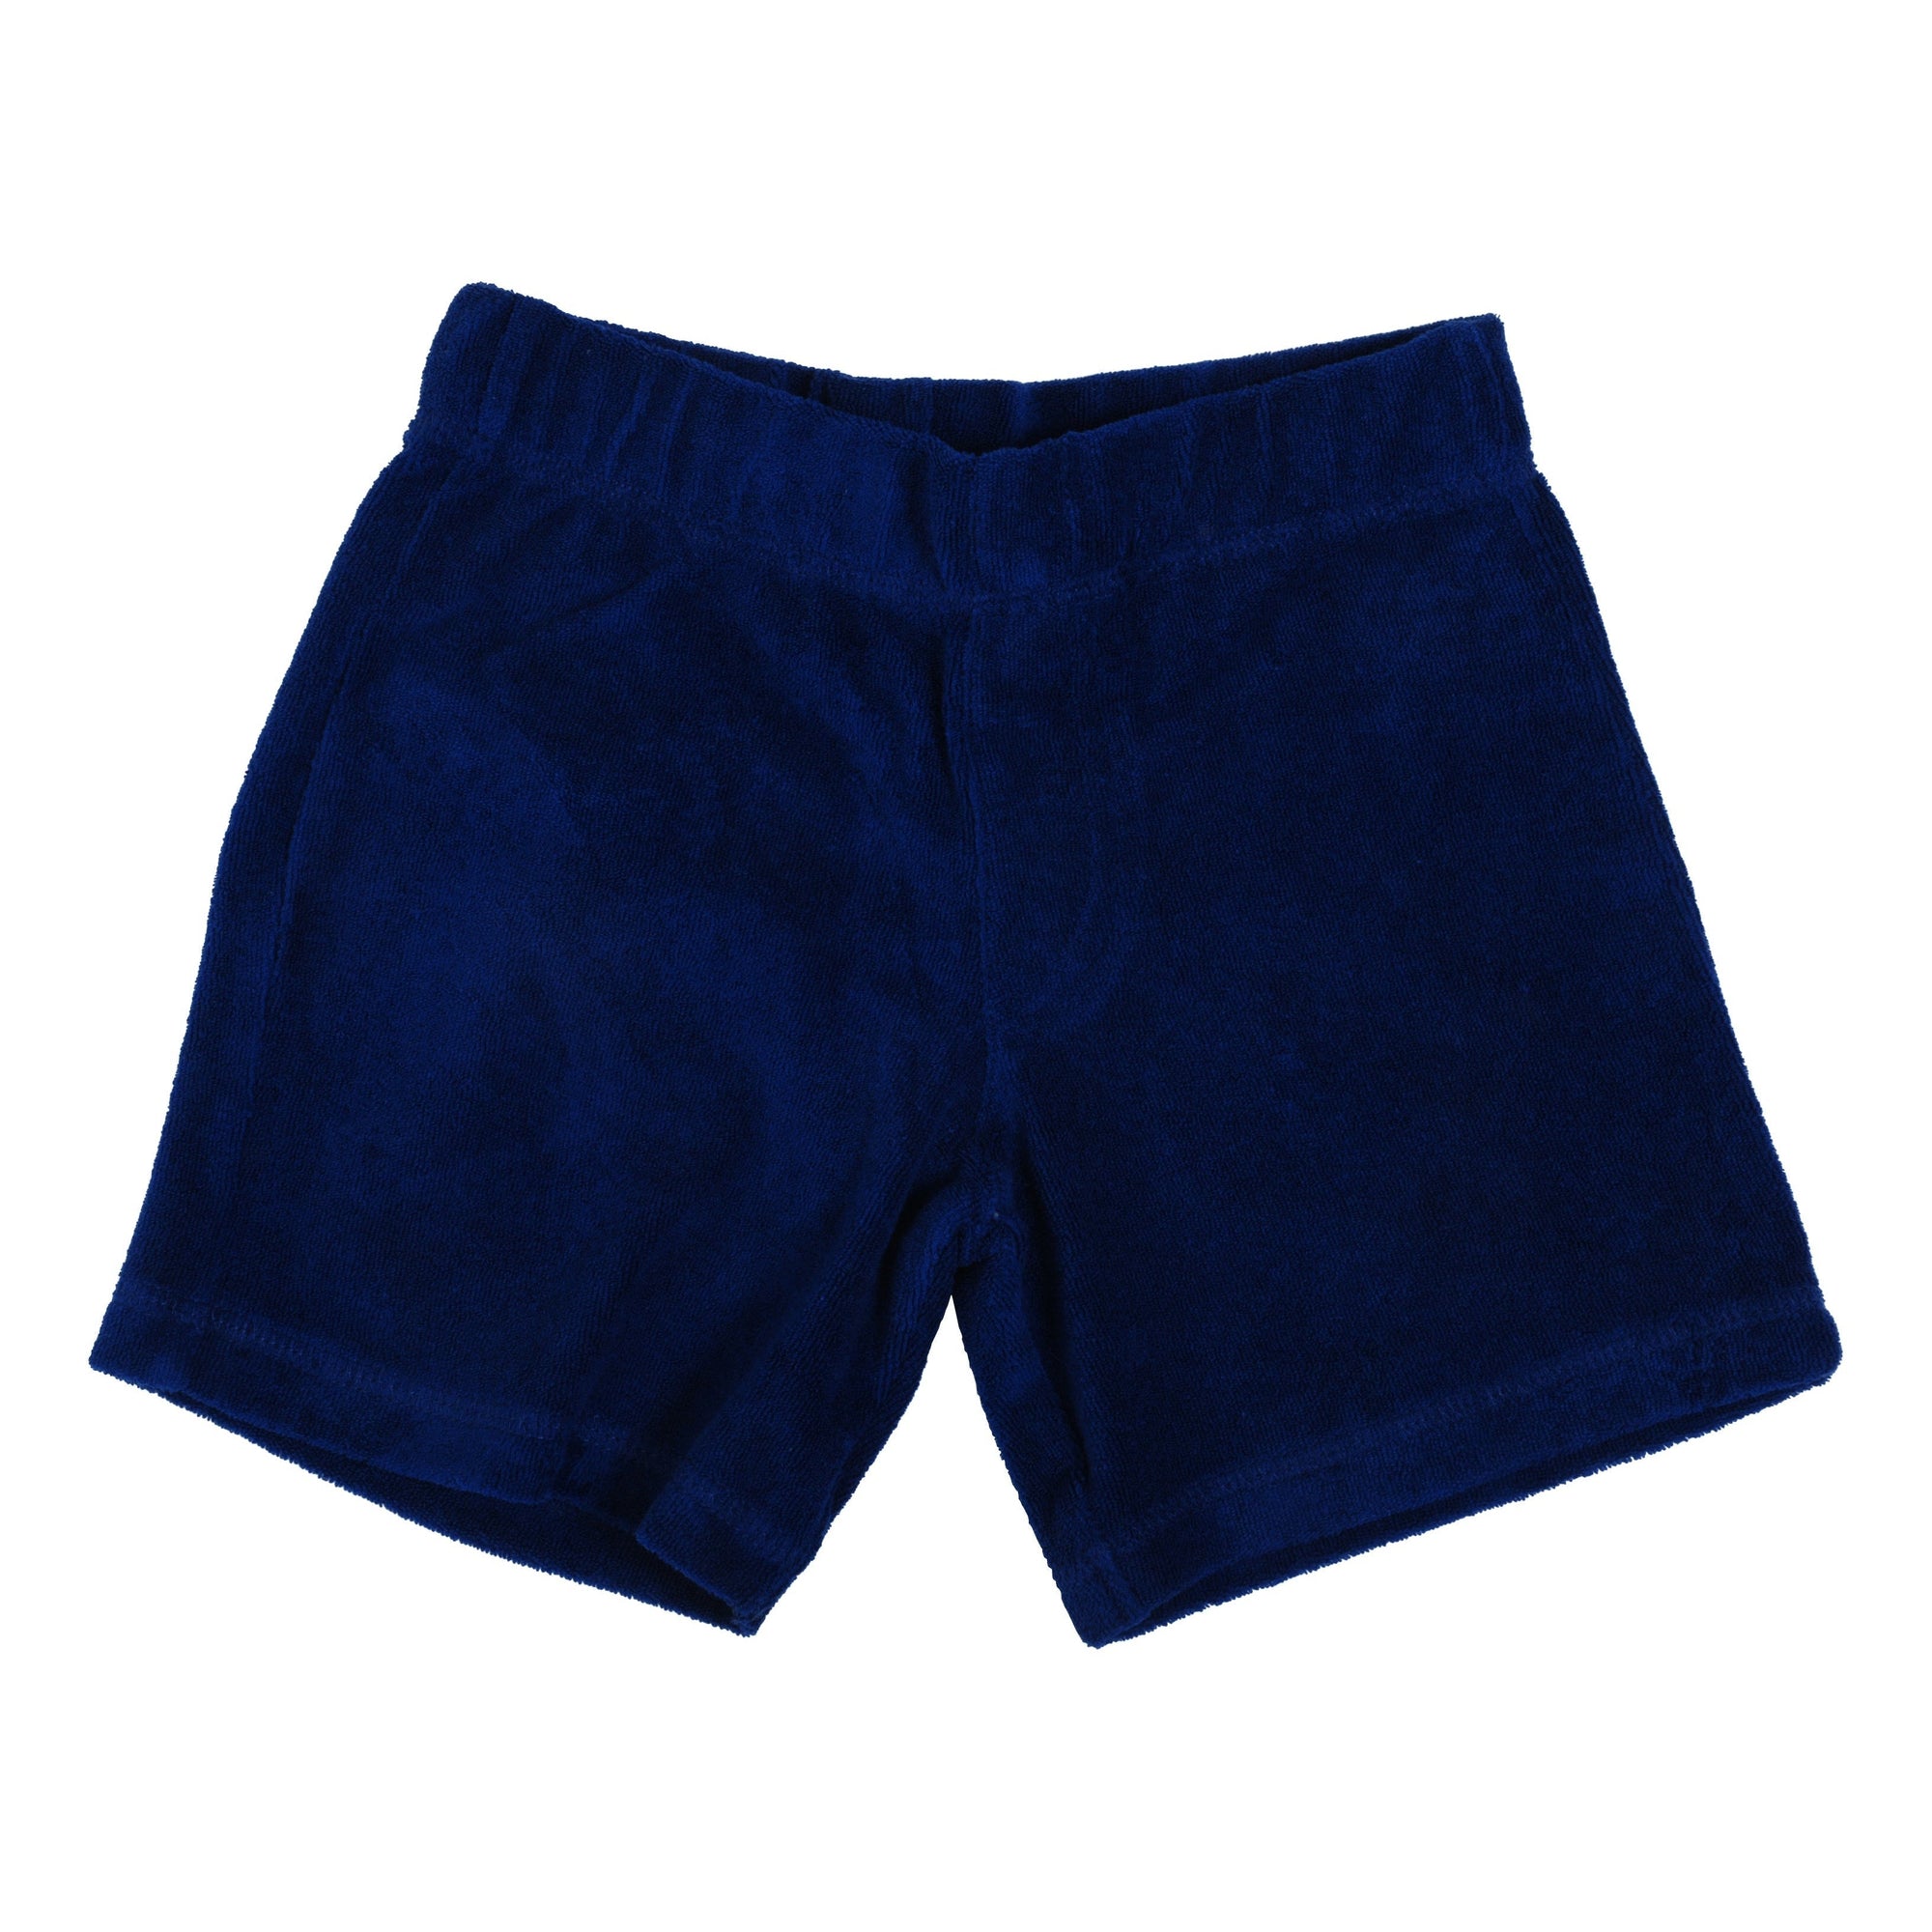 Surf Blue Terry Shorts - 1 Left Size 6-12 months-Duns Sweden-Modern Rascals